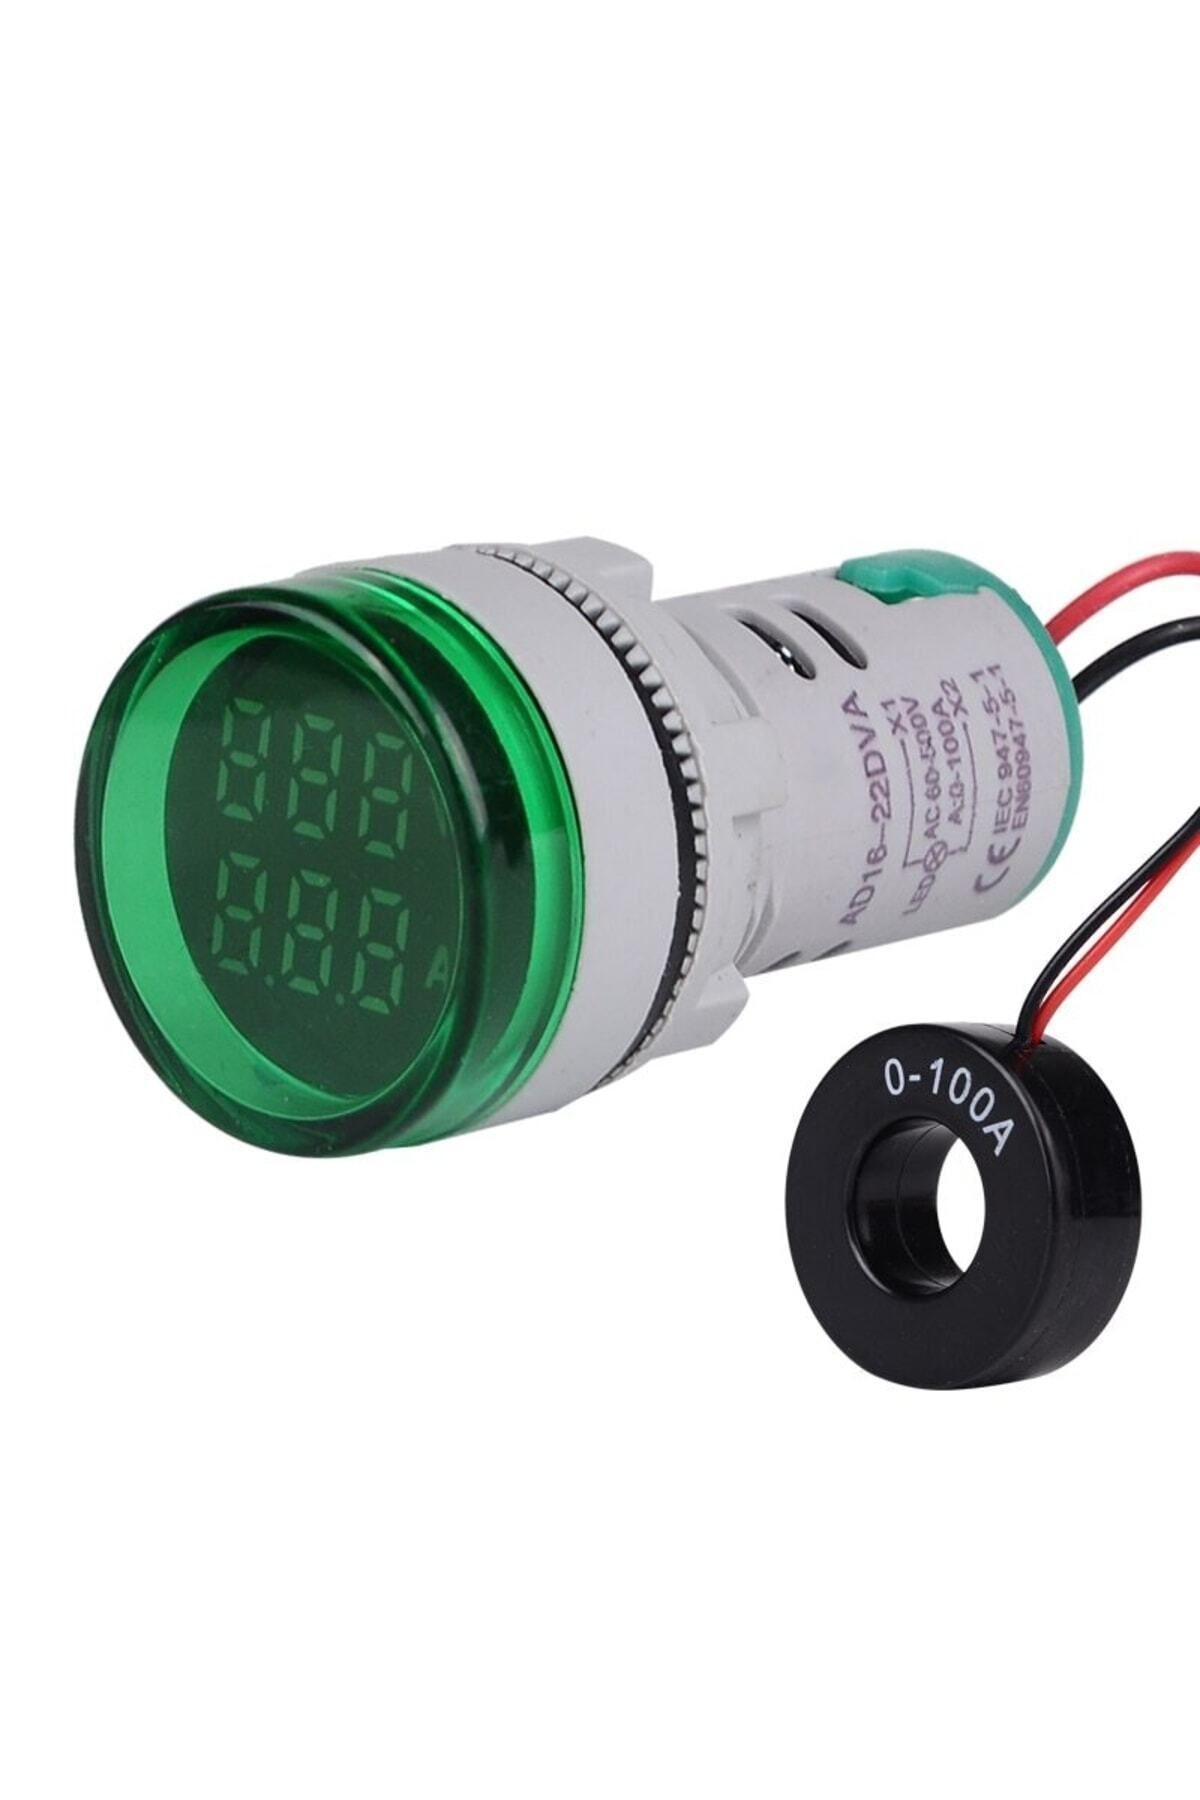 TIANYI Dijital Voltmetre - Ampermetre Ac 50-500v 0-100a - Yeşil